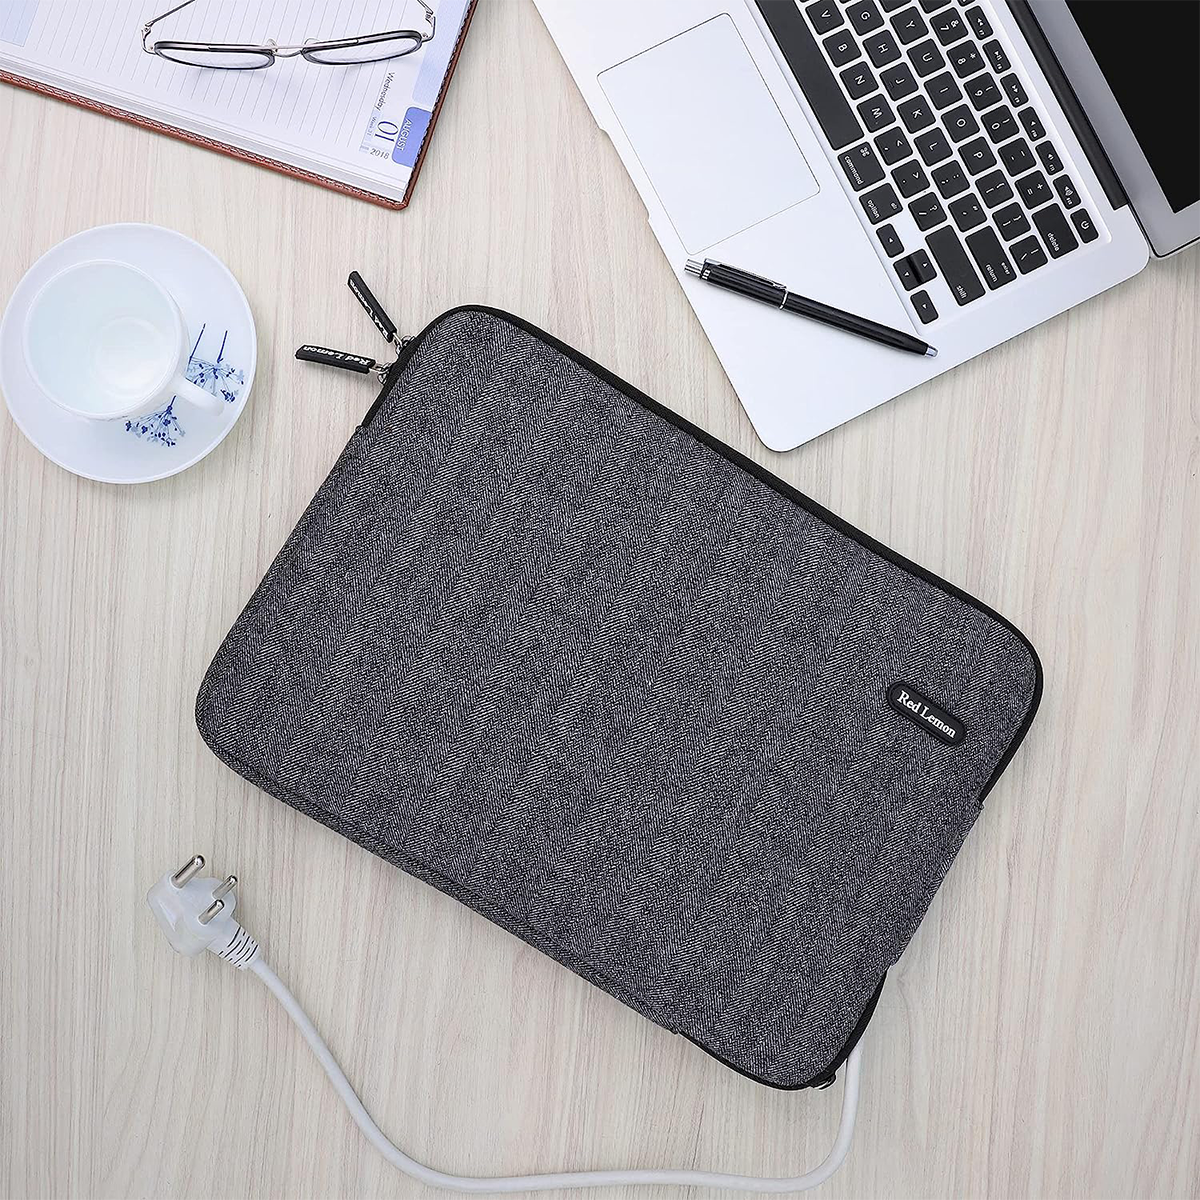 Leather Macbook Case, Laptop Case, Laptop Bag, Macbook Sleeve - Natural Tan  - M611 - Extra Studio